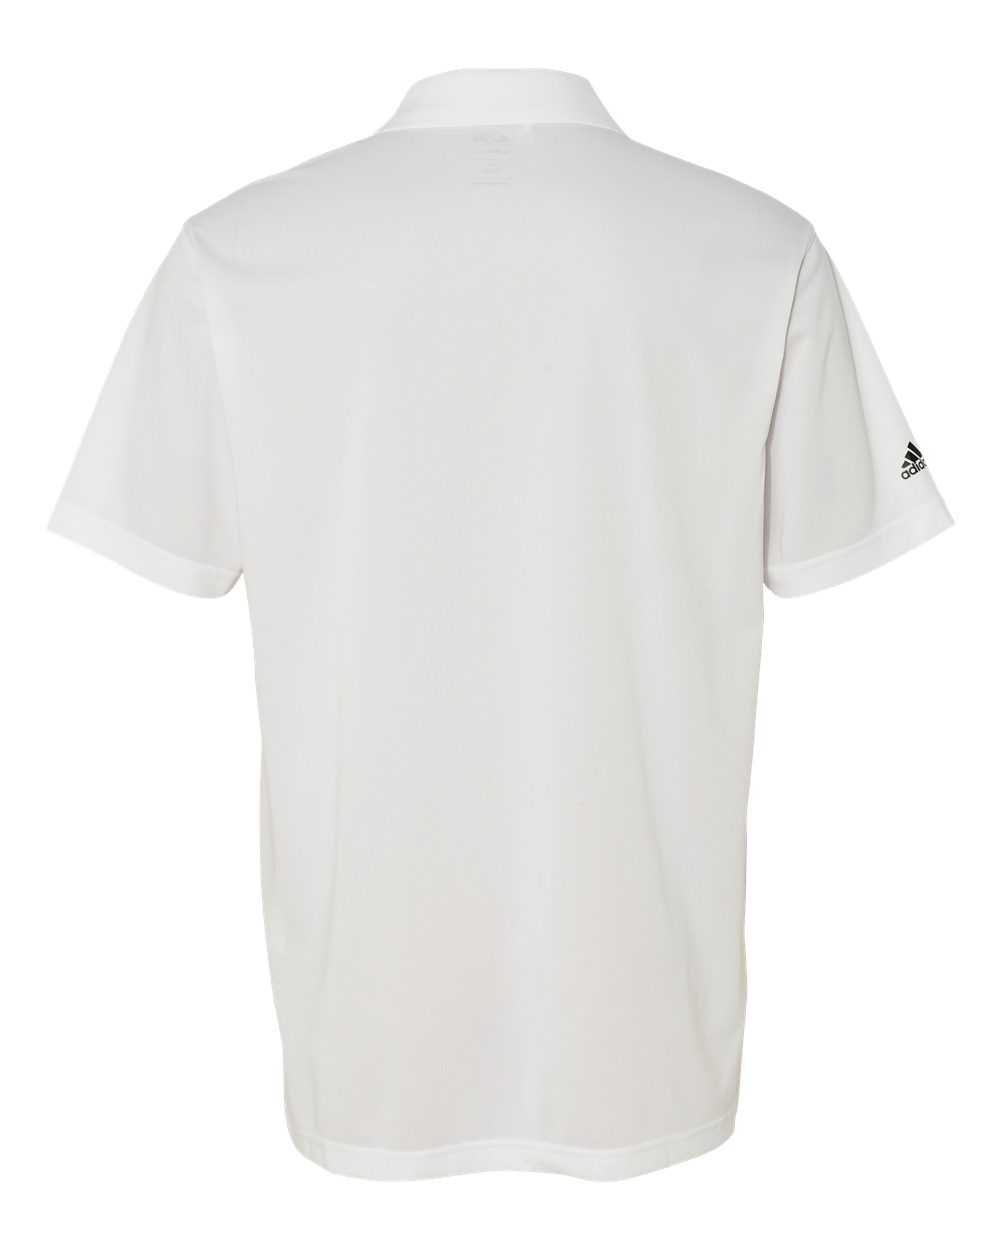 Adidas A130 Basic Sport Shirt - White Black - HIT a Double